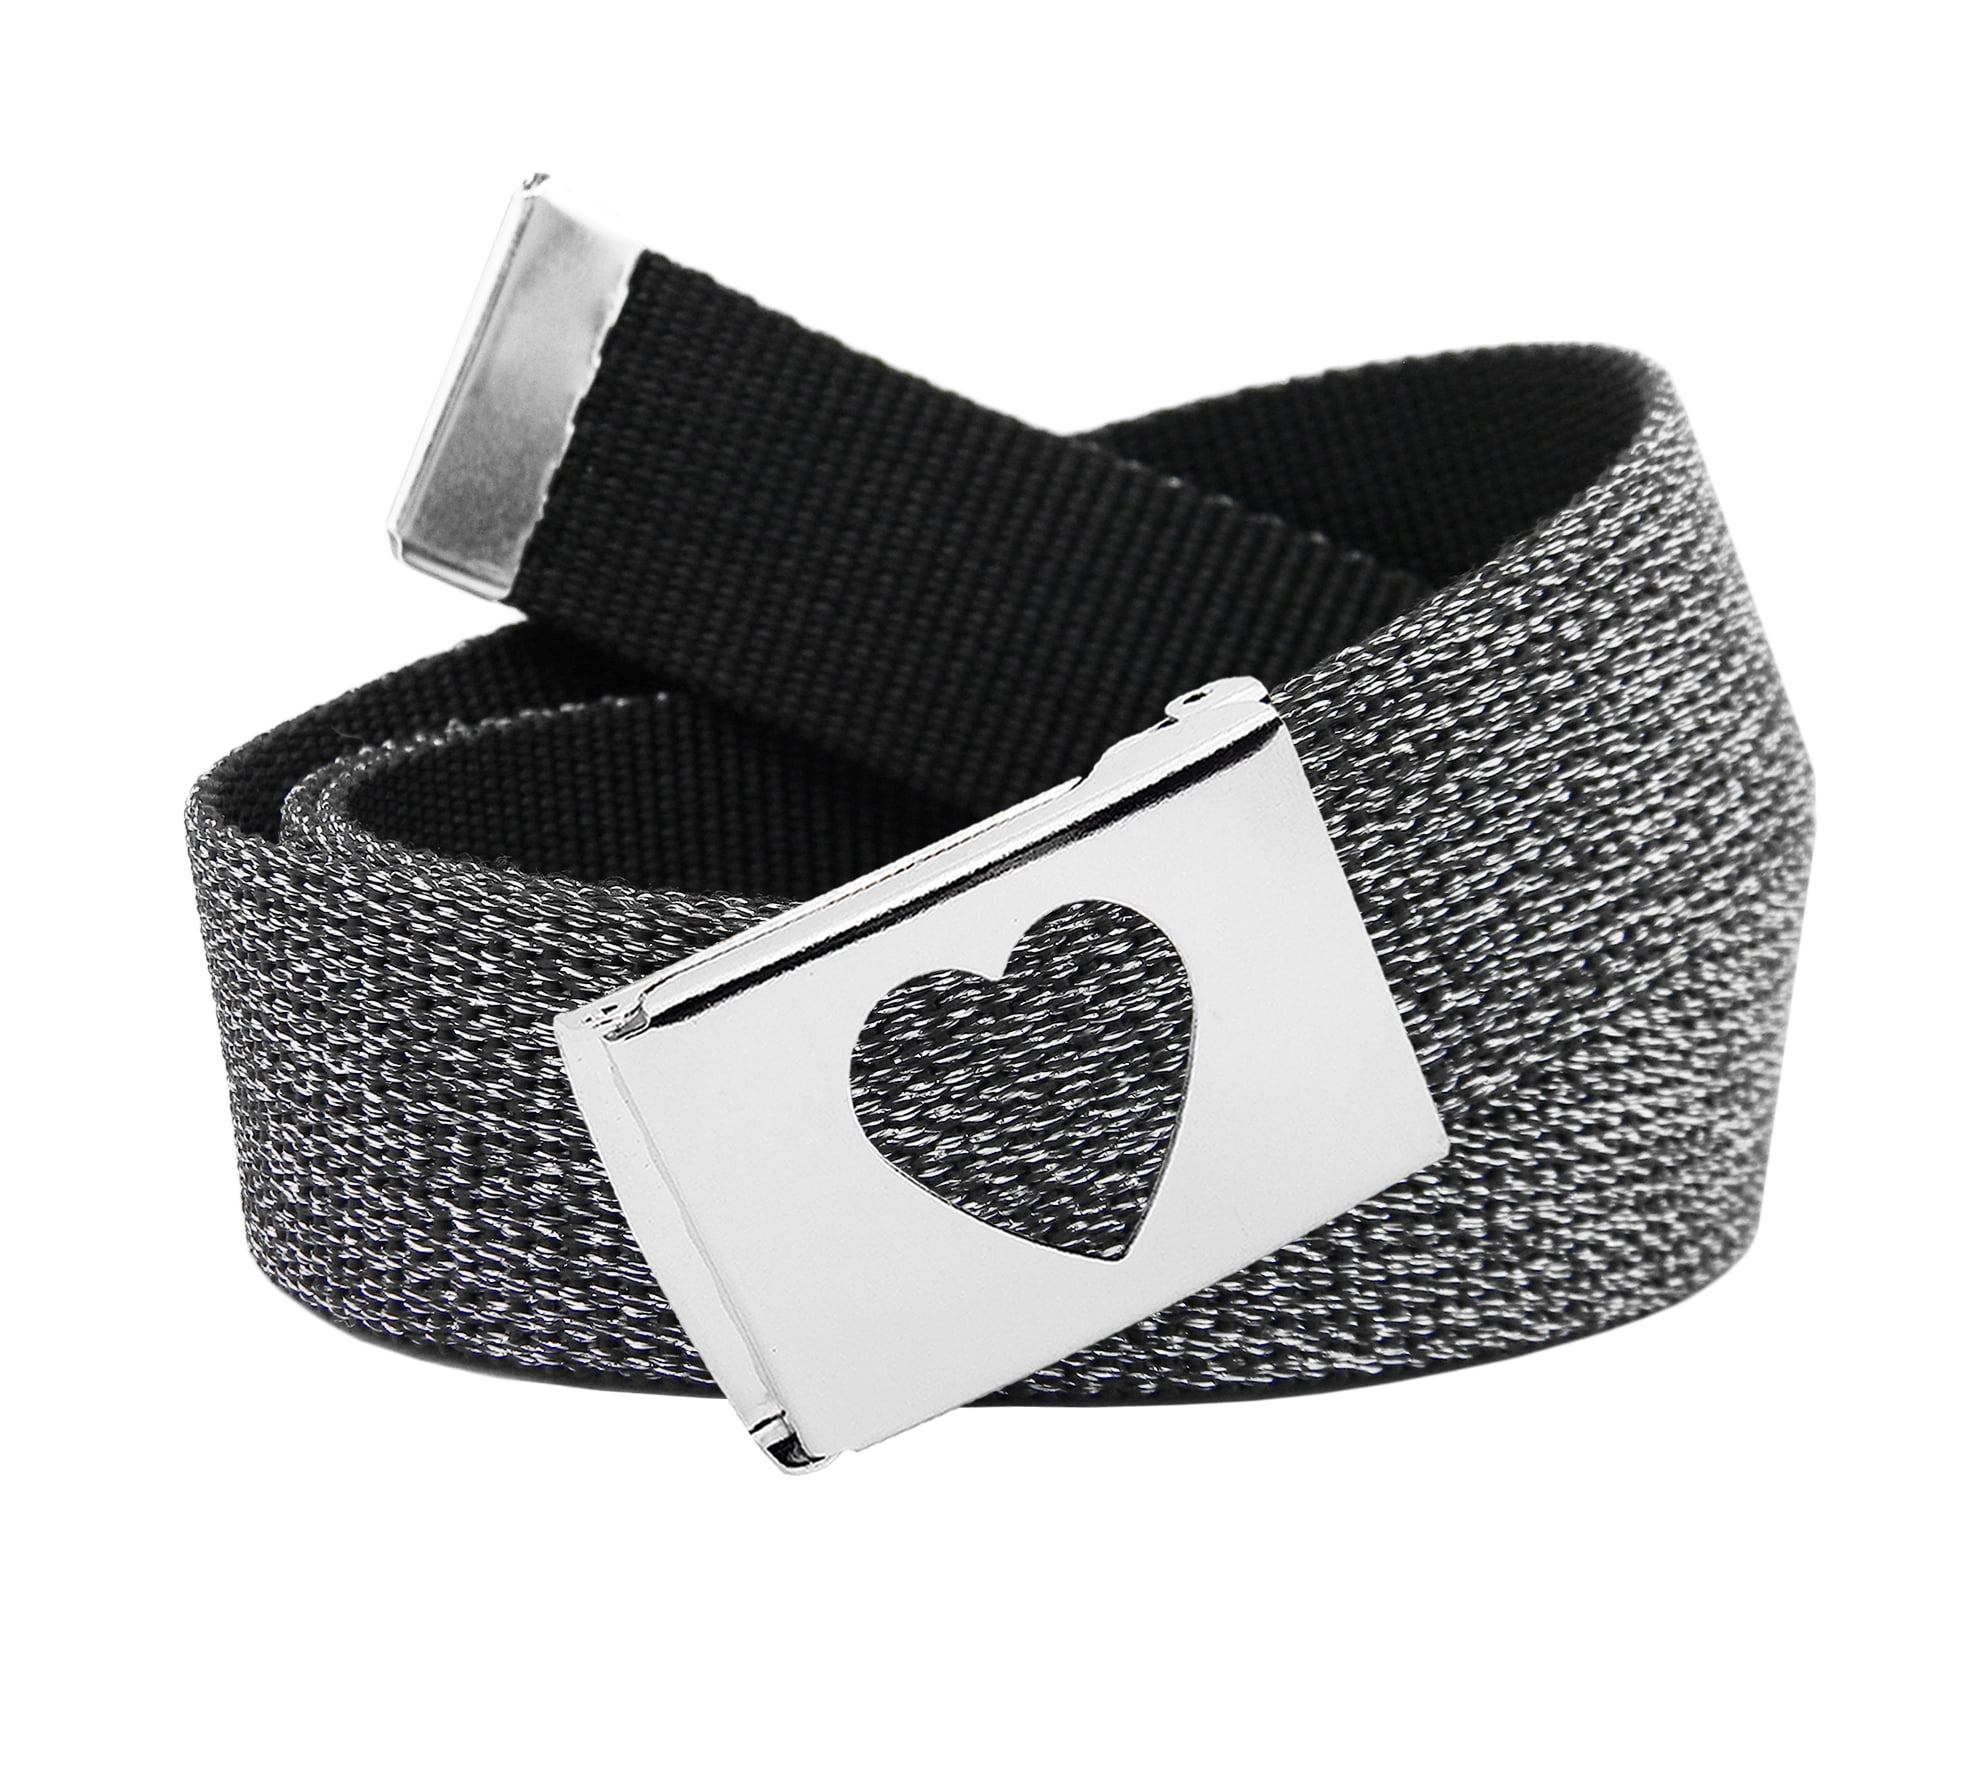 Girl's School Uniform Silver Flip Top Heart Belt Buckle with Canvas Web Belt